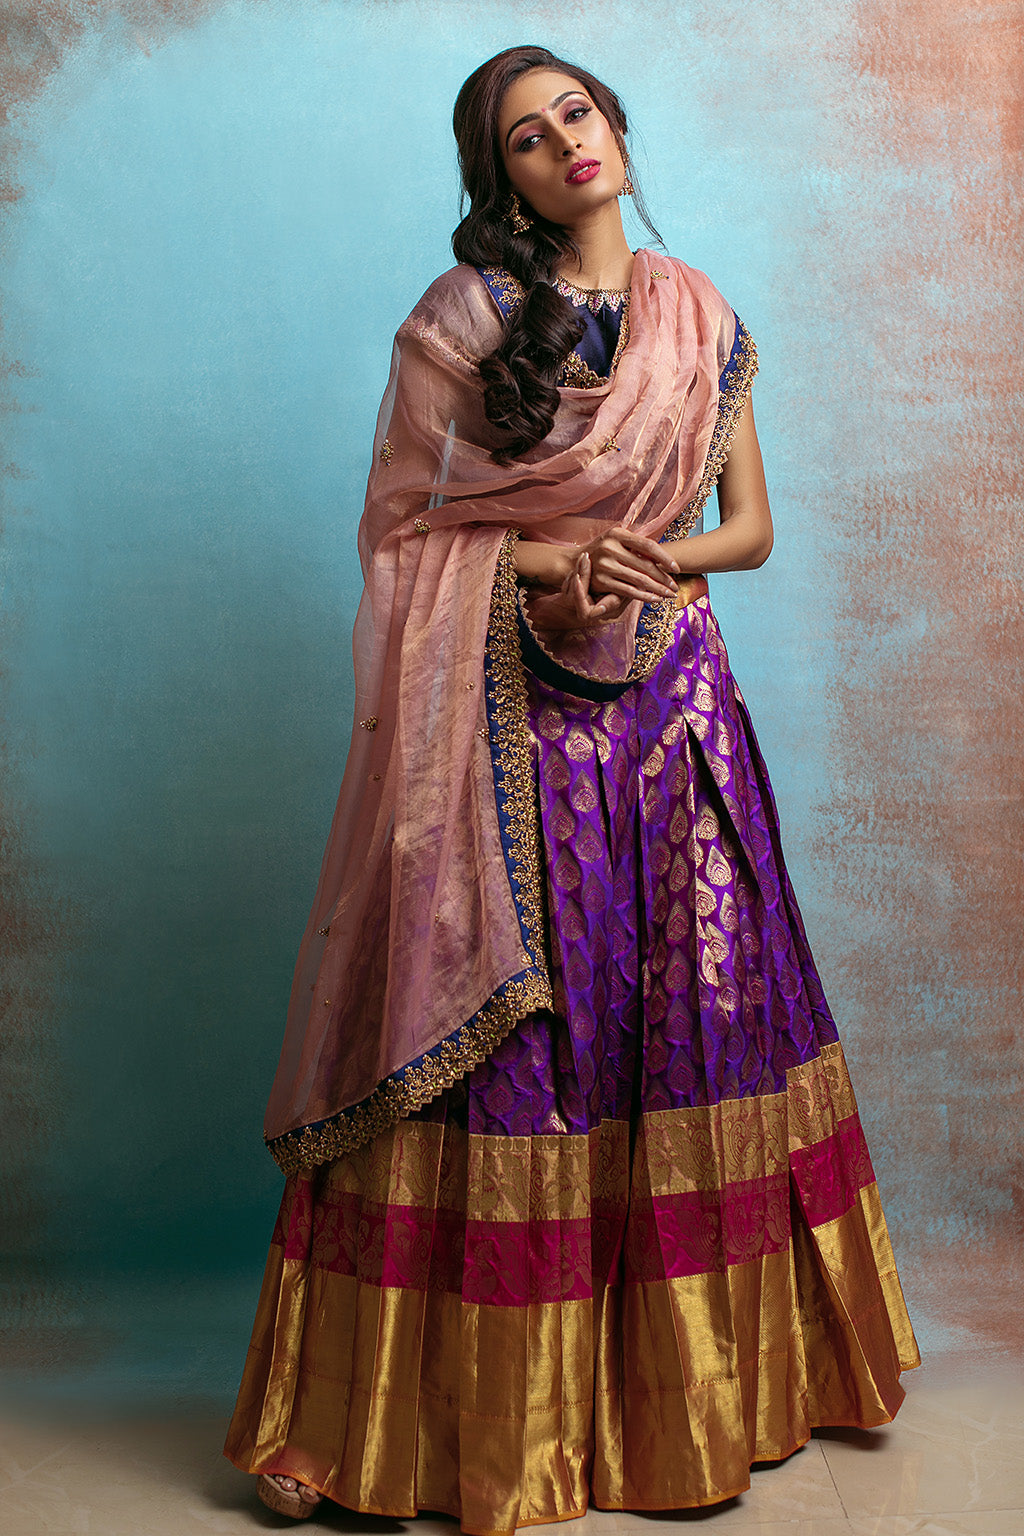 High neck blouse with purple kanchi skirt and tissue blush dupatta